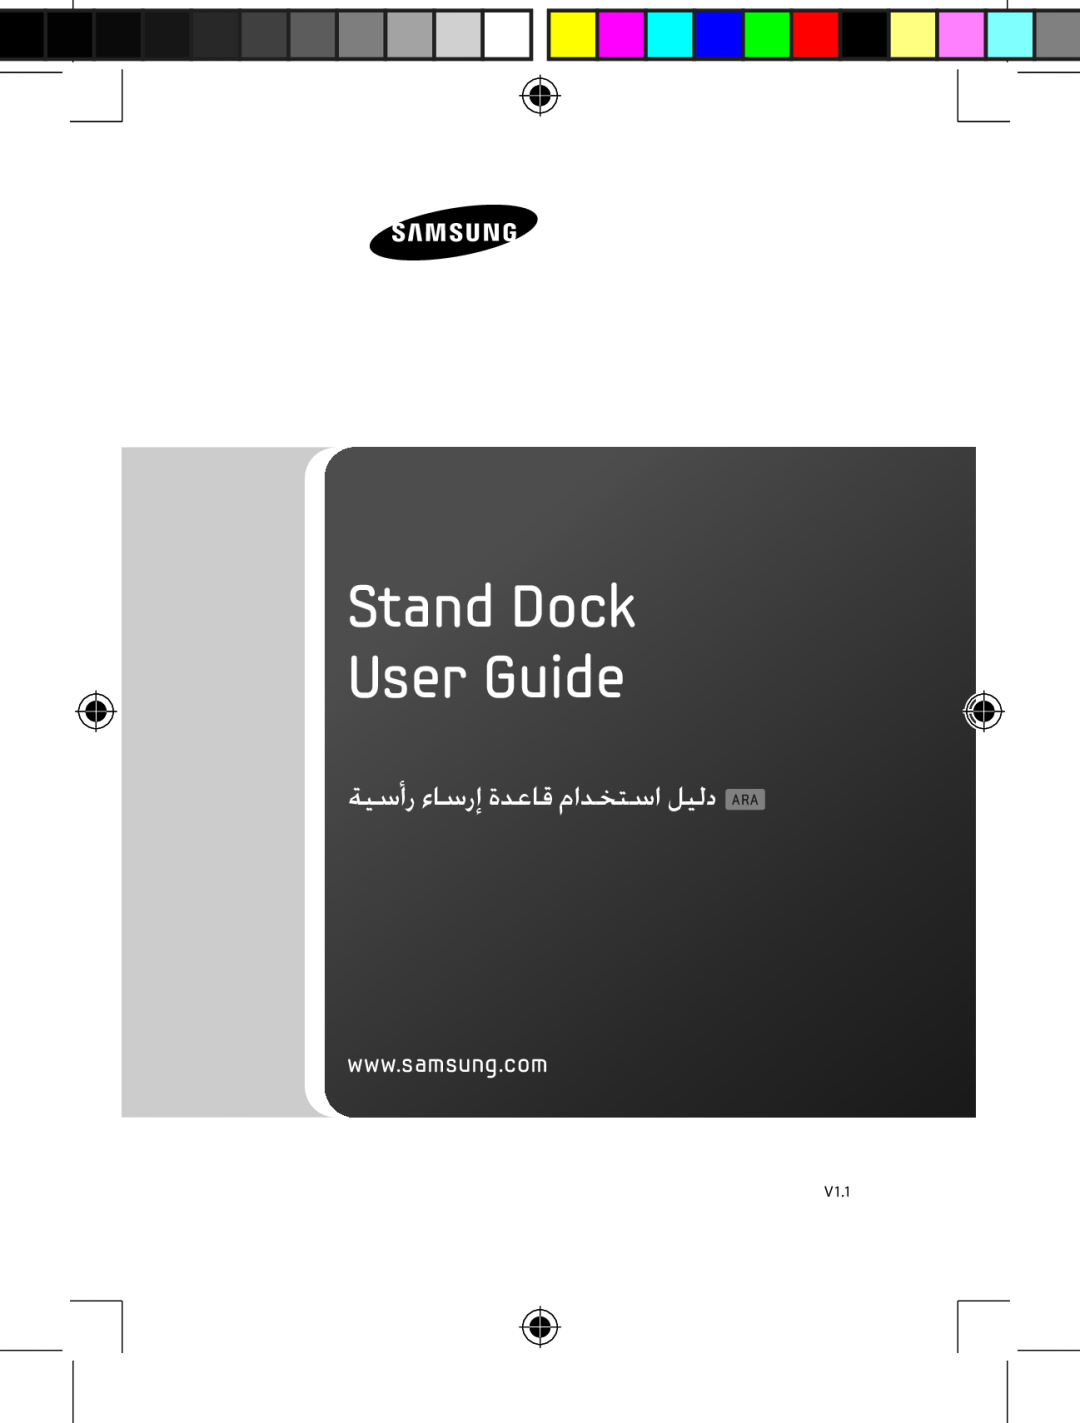 Samsung AARD7NSDOUS, AA-RD7NMKD/US manual ةيسأر ءاسرإ ةدعاق مادختسا ليلد Ara, Stand Dock User Guide 